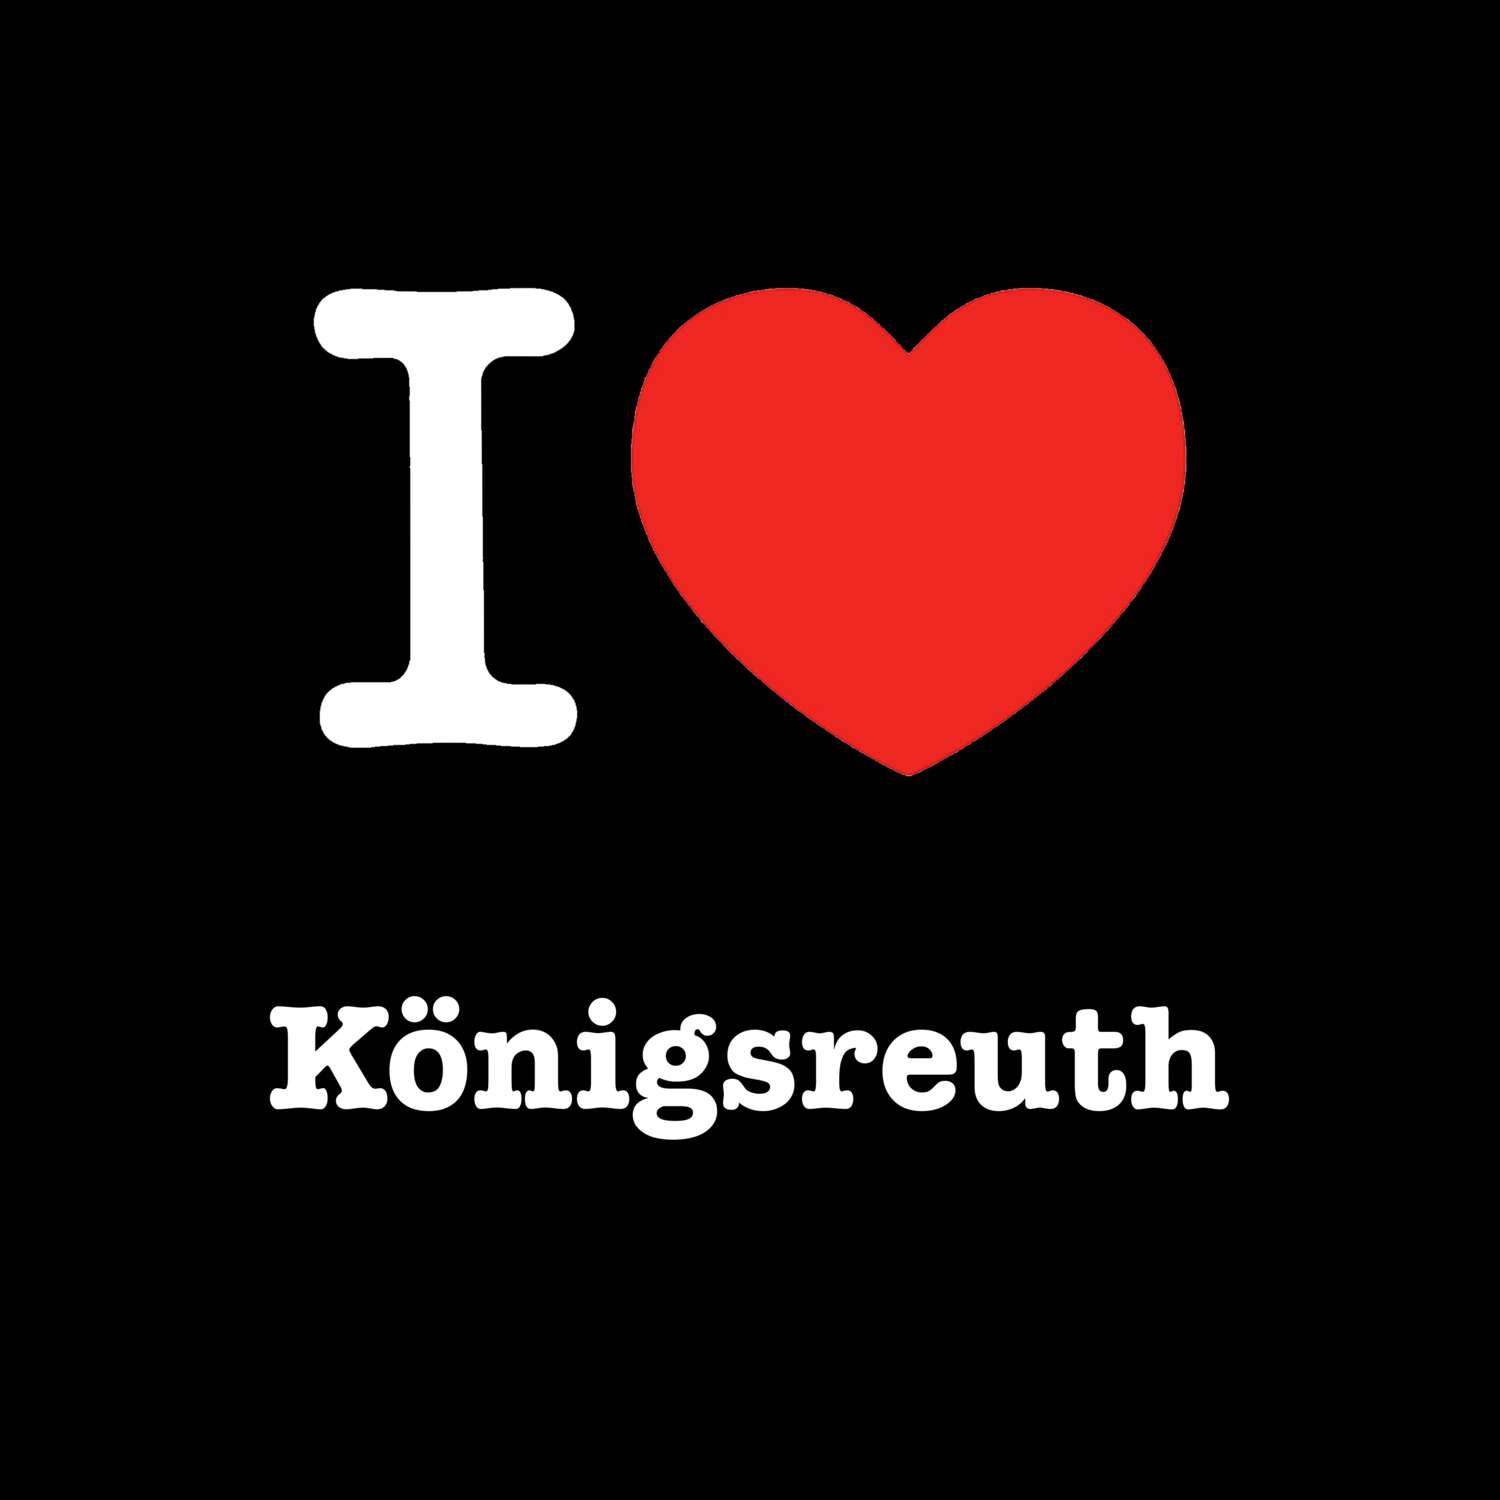 Königsreuth T-Shirt »I love«